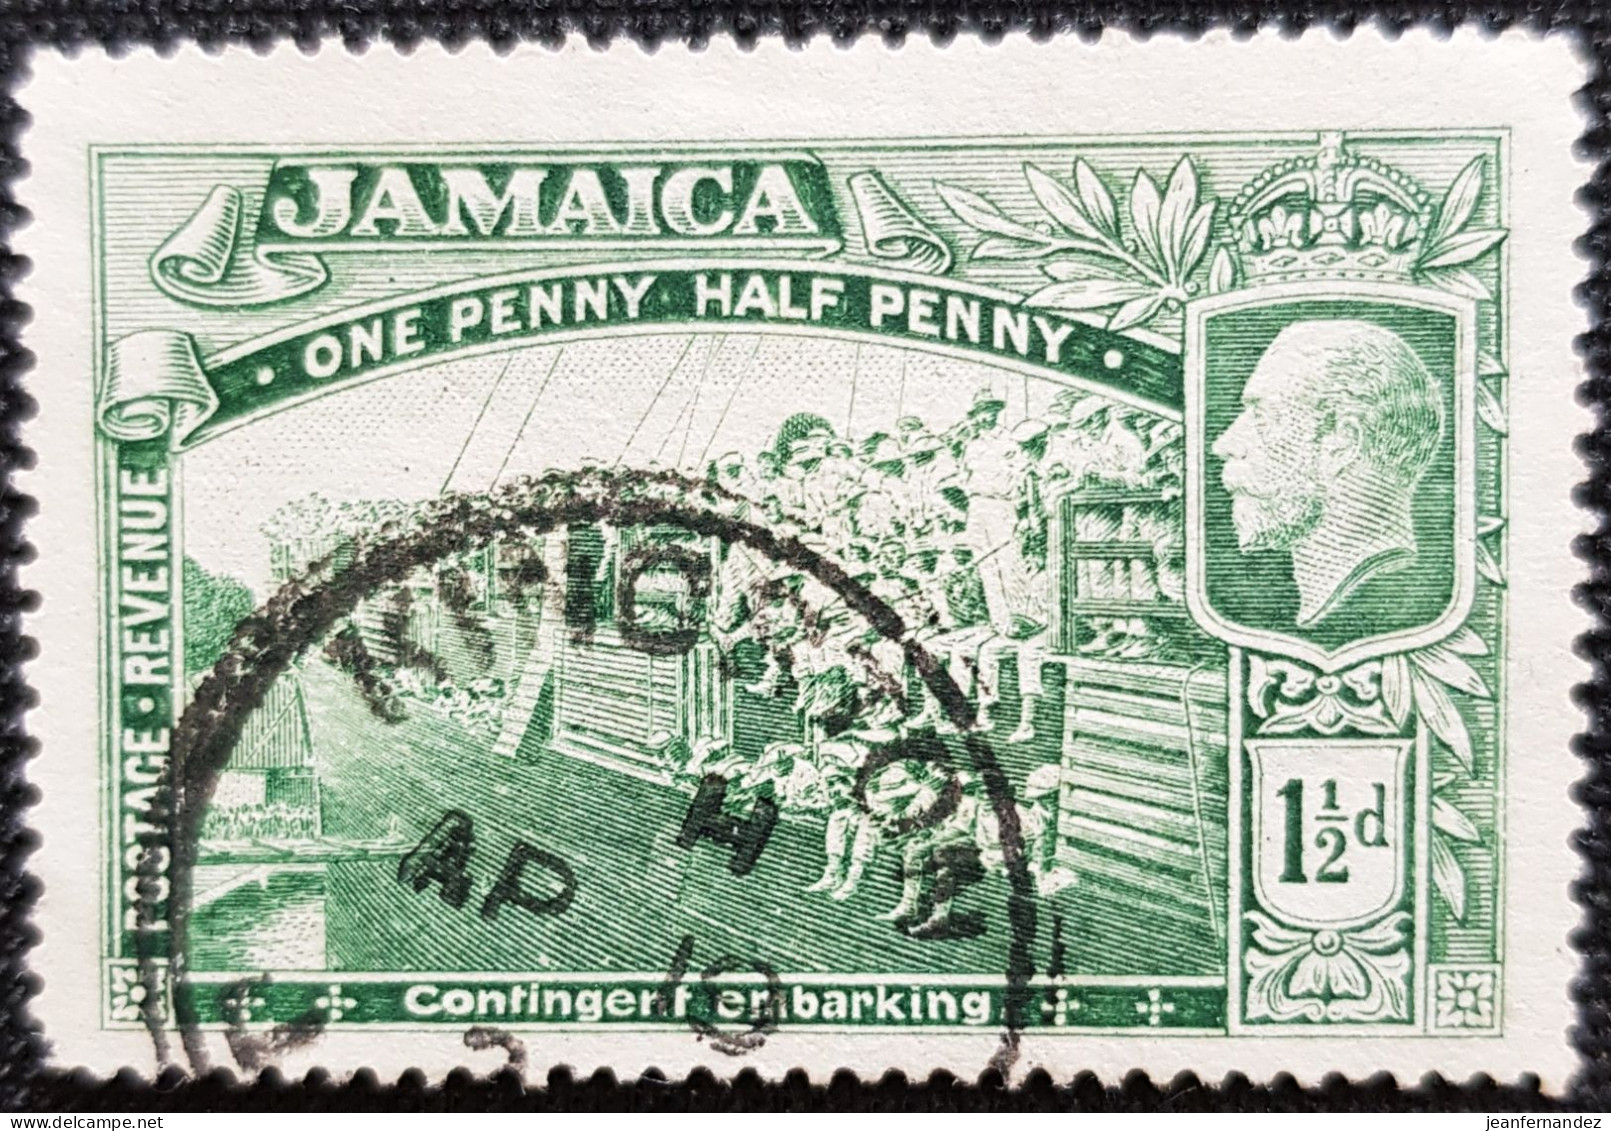 Grande-Bretagne (ex-colonies & Protectorats) > Jamaïque 1921 -1923 Local Motif  Stampworld N° 92 - Jamaïque (...-1961)